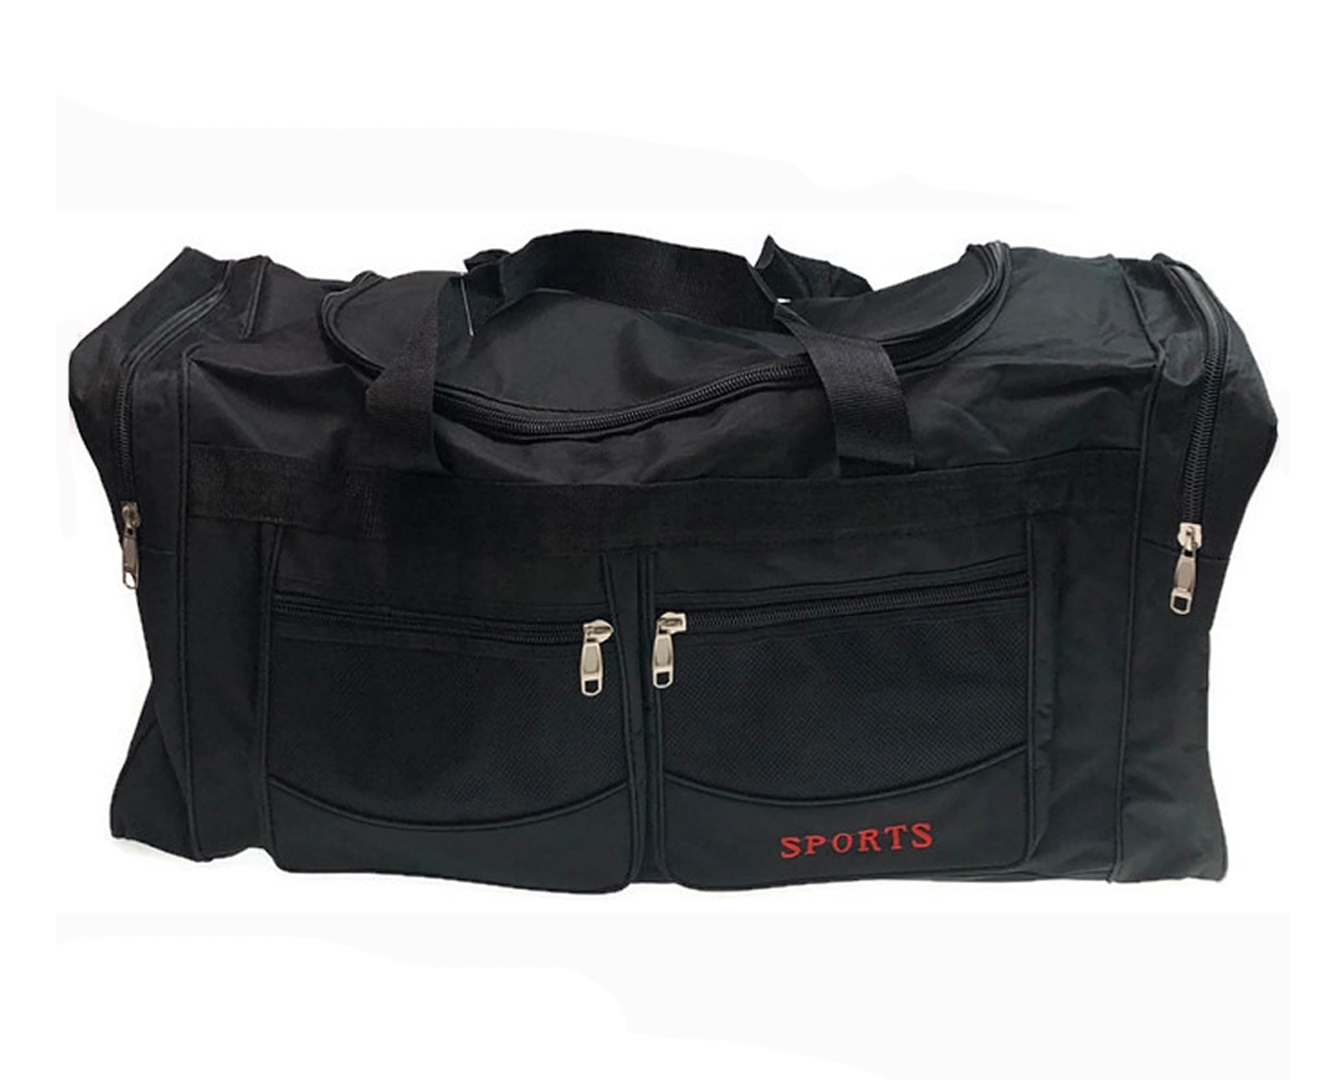 EXTRA LARGE Sports Duffle Bag Gym Canvas Duffel Travel Foldable - Black